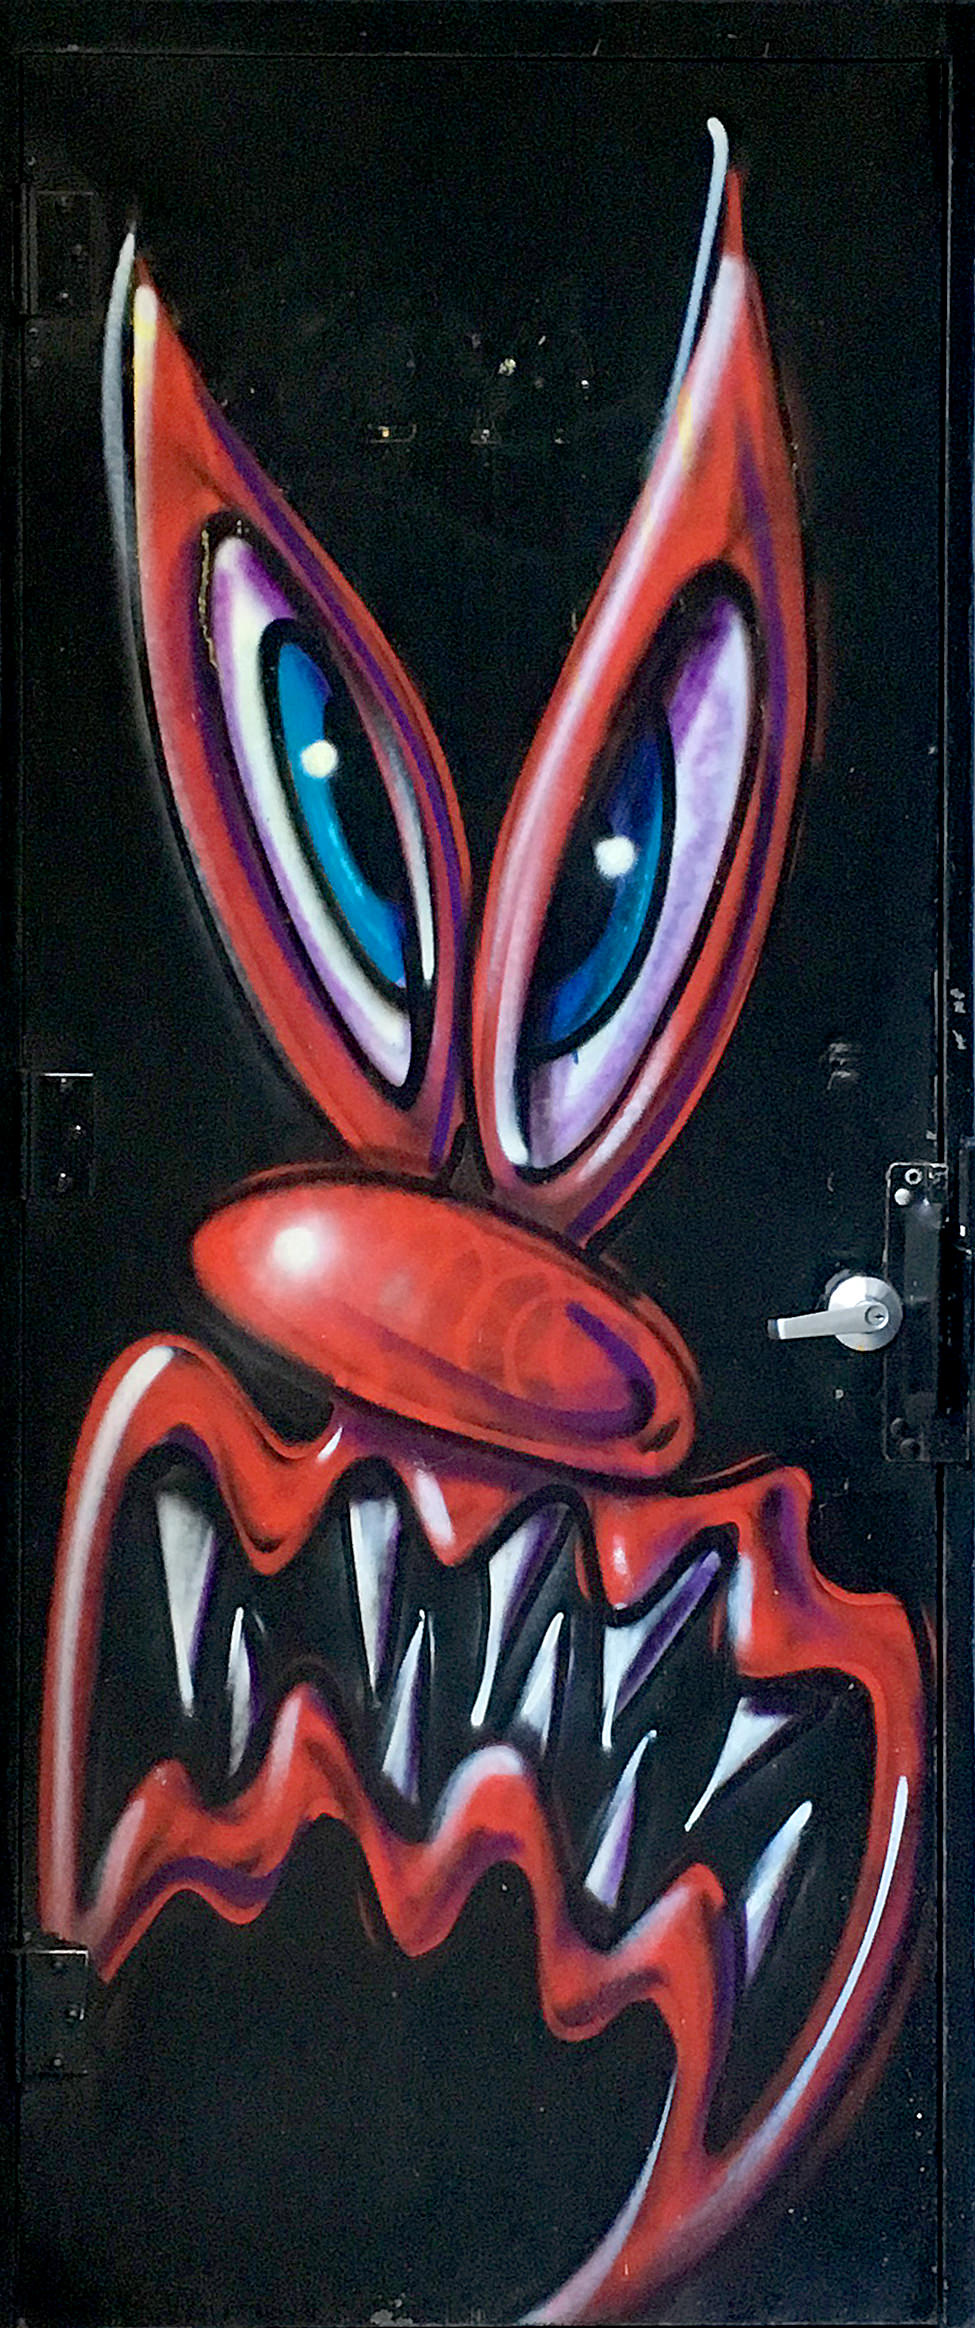 graffiti on door